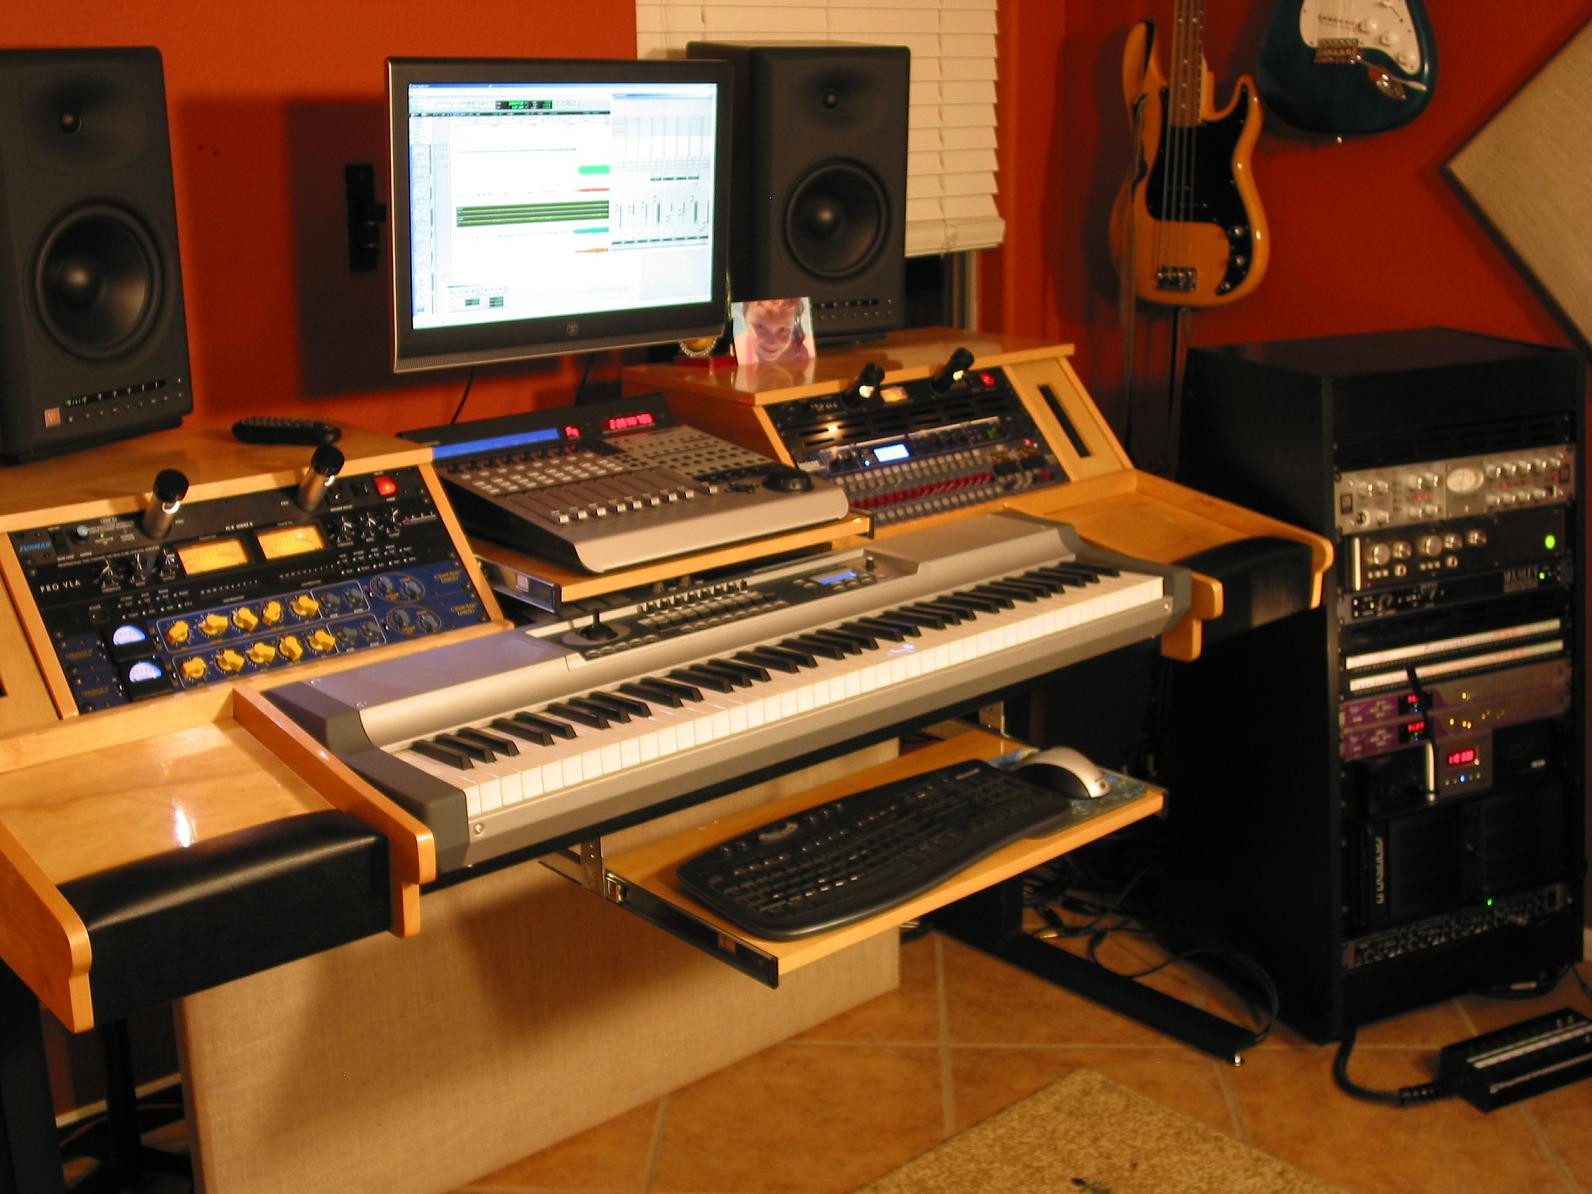 Best ideas about DIY Music Production Desk
. Save or Pin 1000 images about DIY Music Production Desk Ideas on Now.